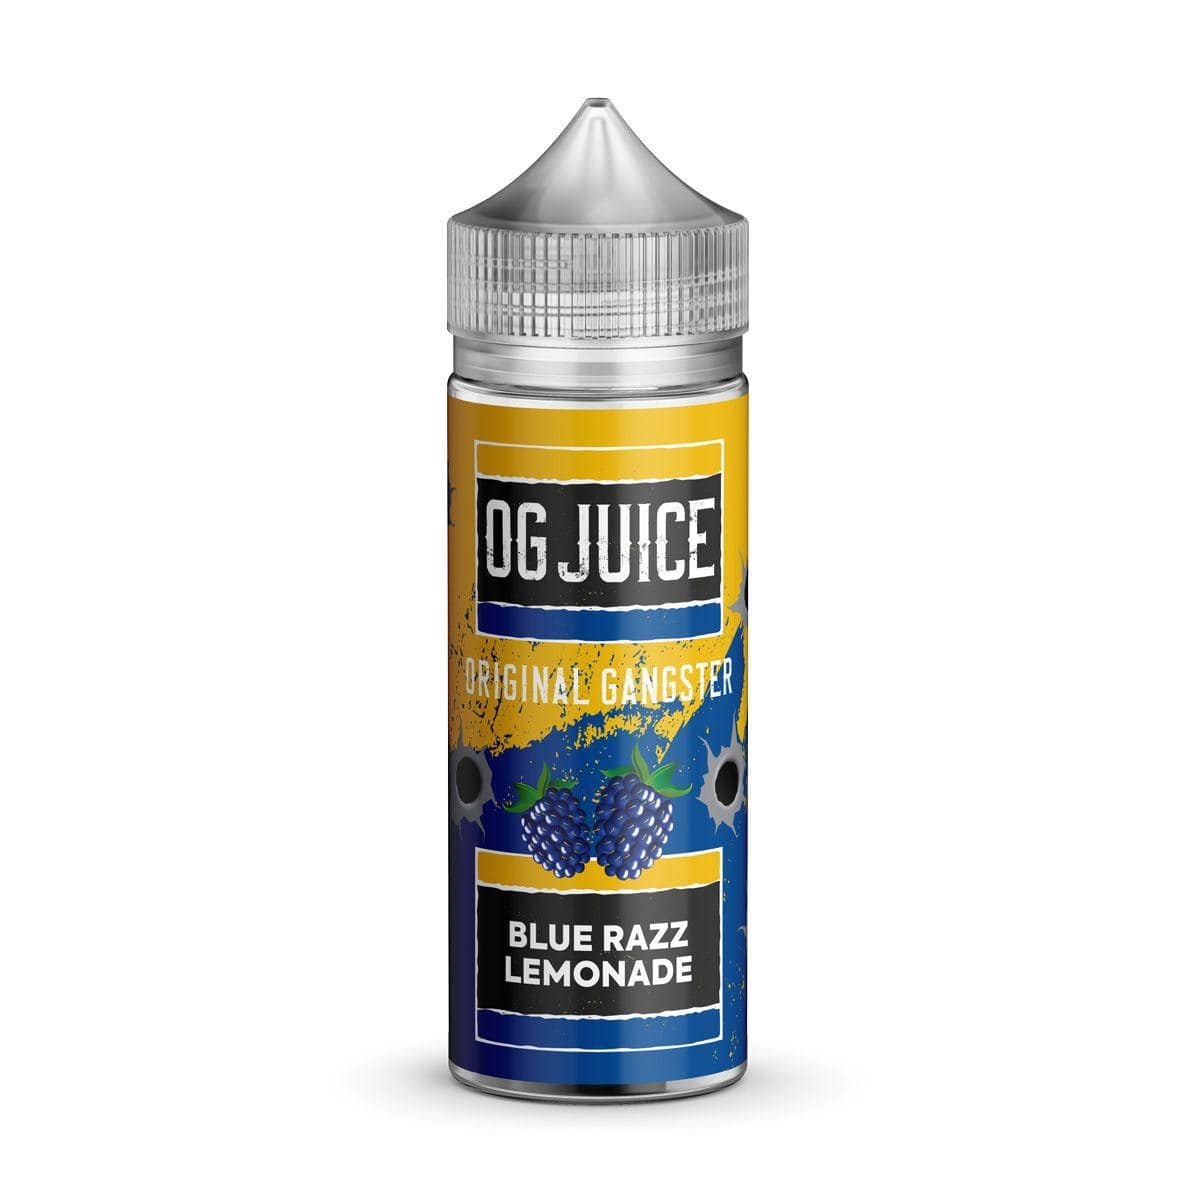 OG Juice Original Gangster - Blue Razz Lemonade - 100ml E-liquid Shortfill - Mcr Vape Distro